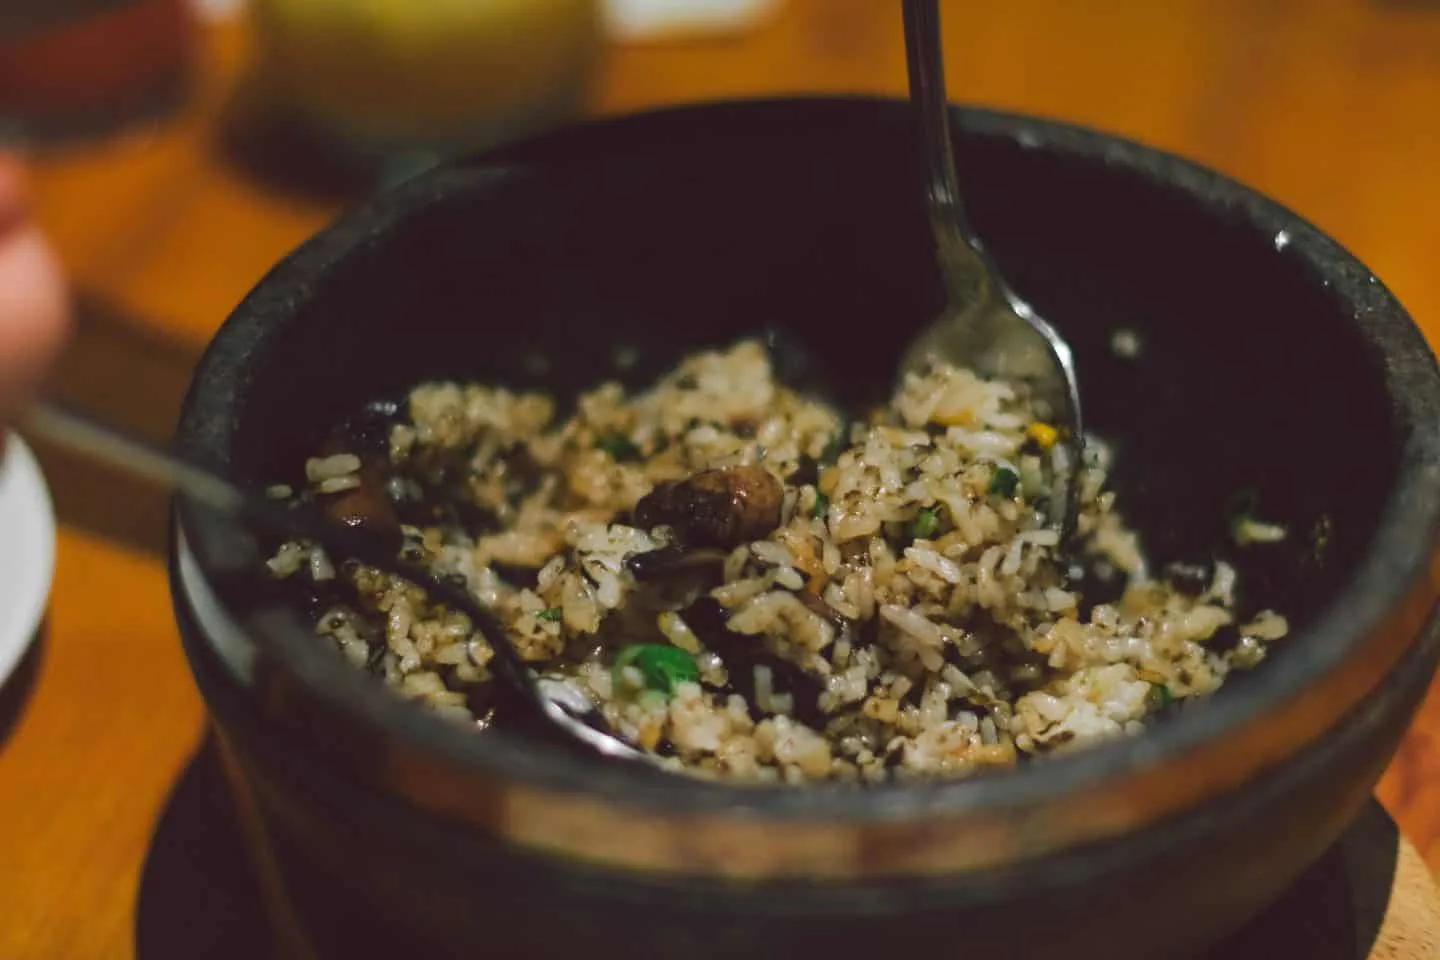 The Kinoko Bibimbap is a vegetarian dish filled with rice, mushrooms, cheese, and seaweed sauce.